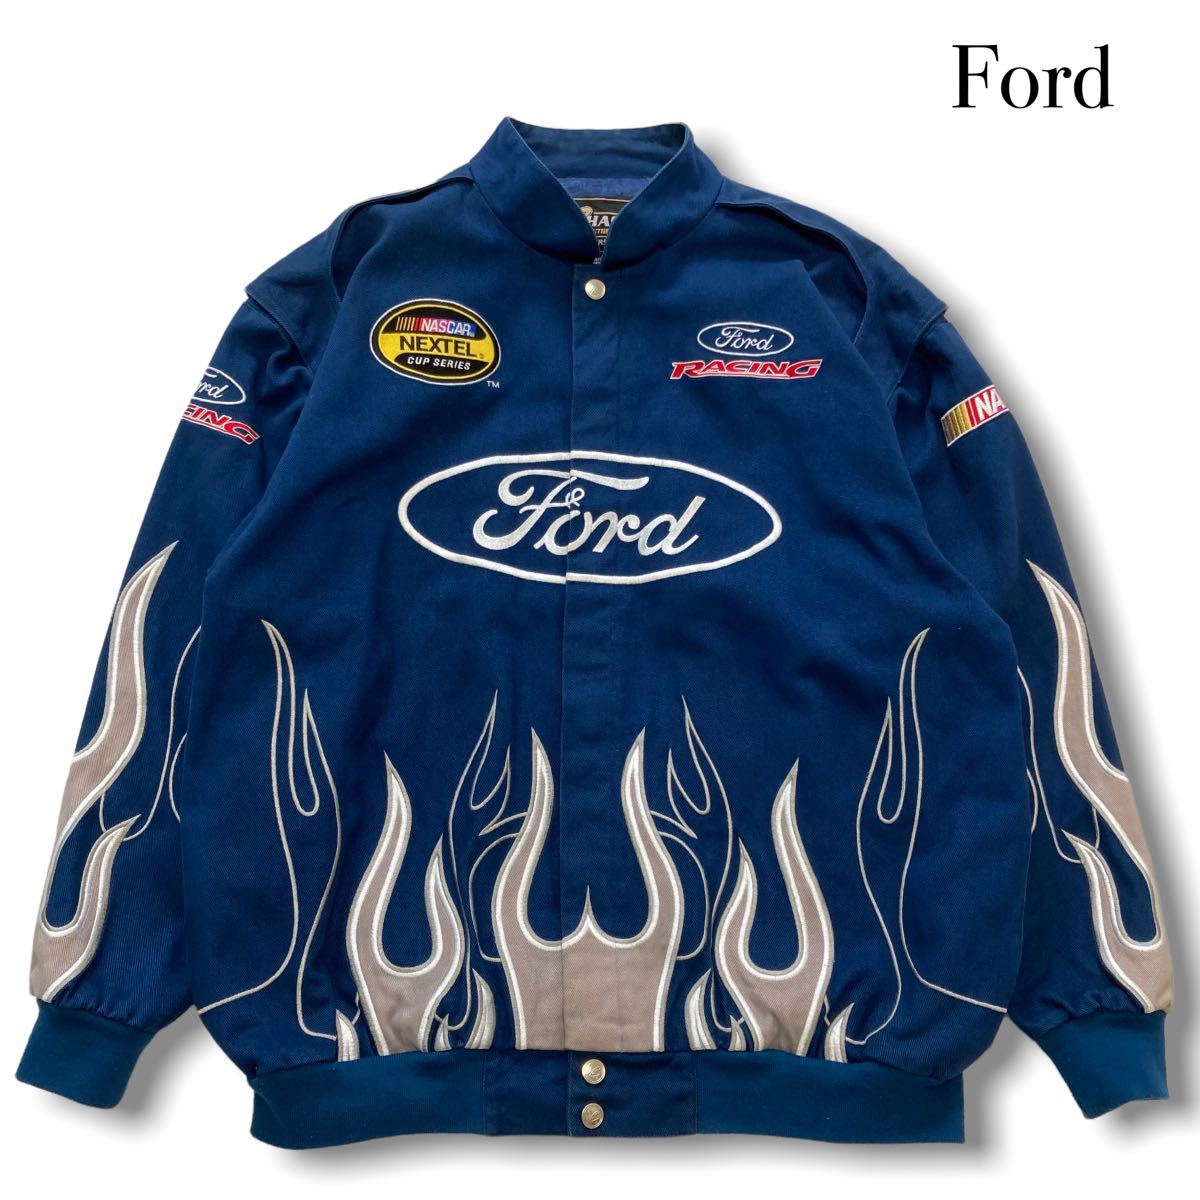 CHASE】 『Ford』フォードレーシングジャケット ファイヤーパターン